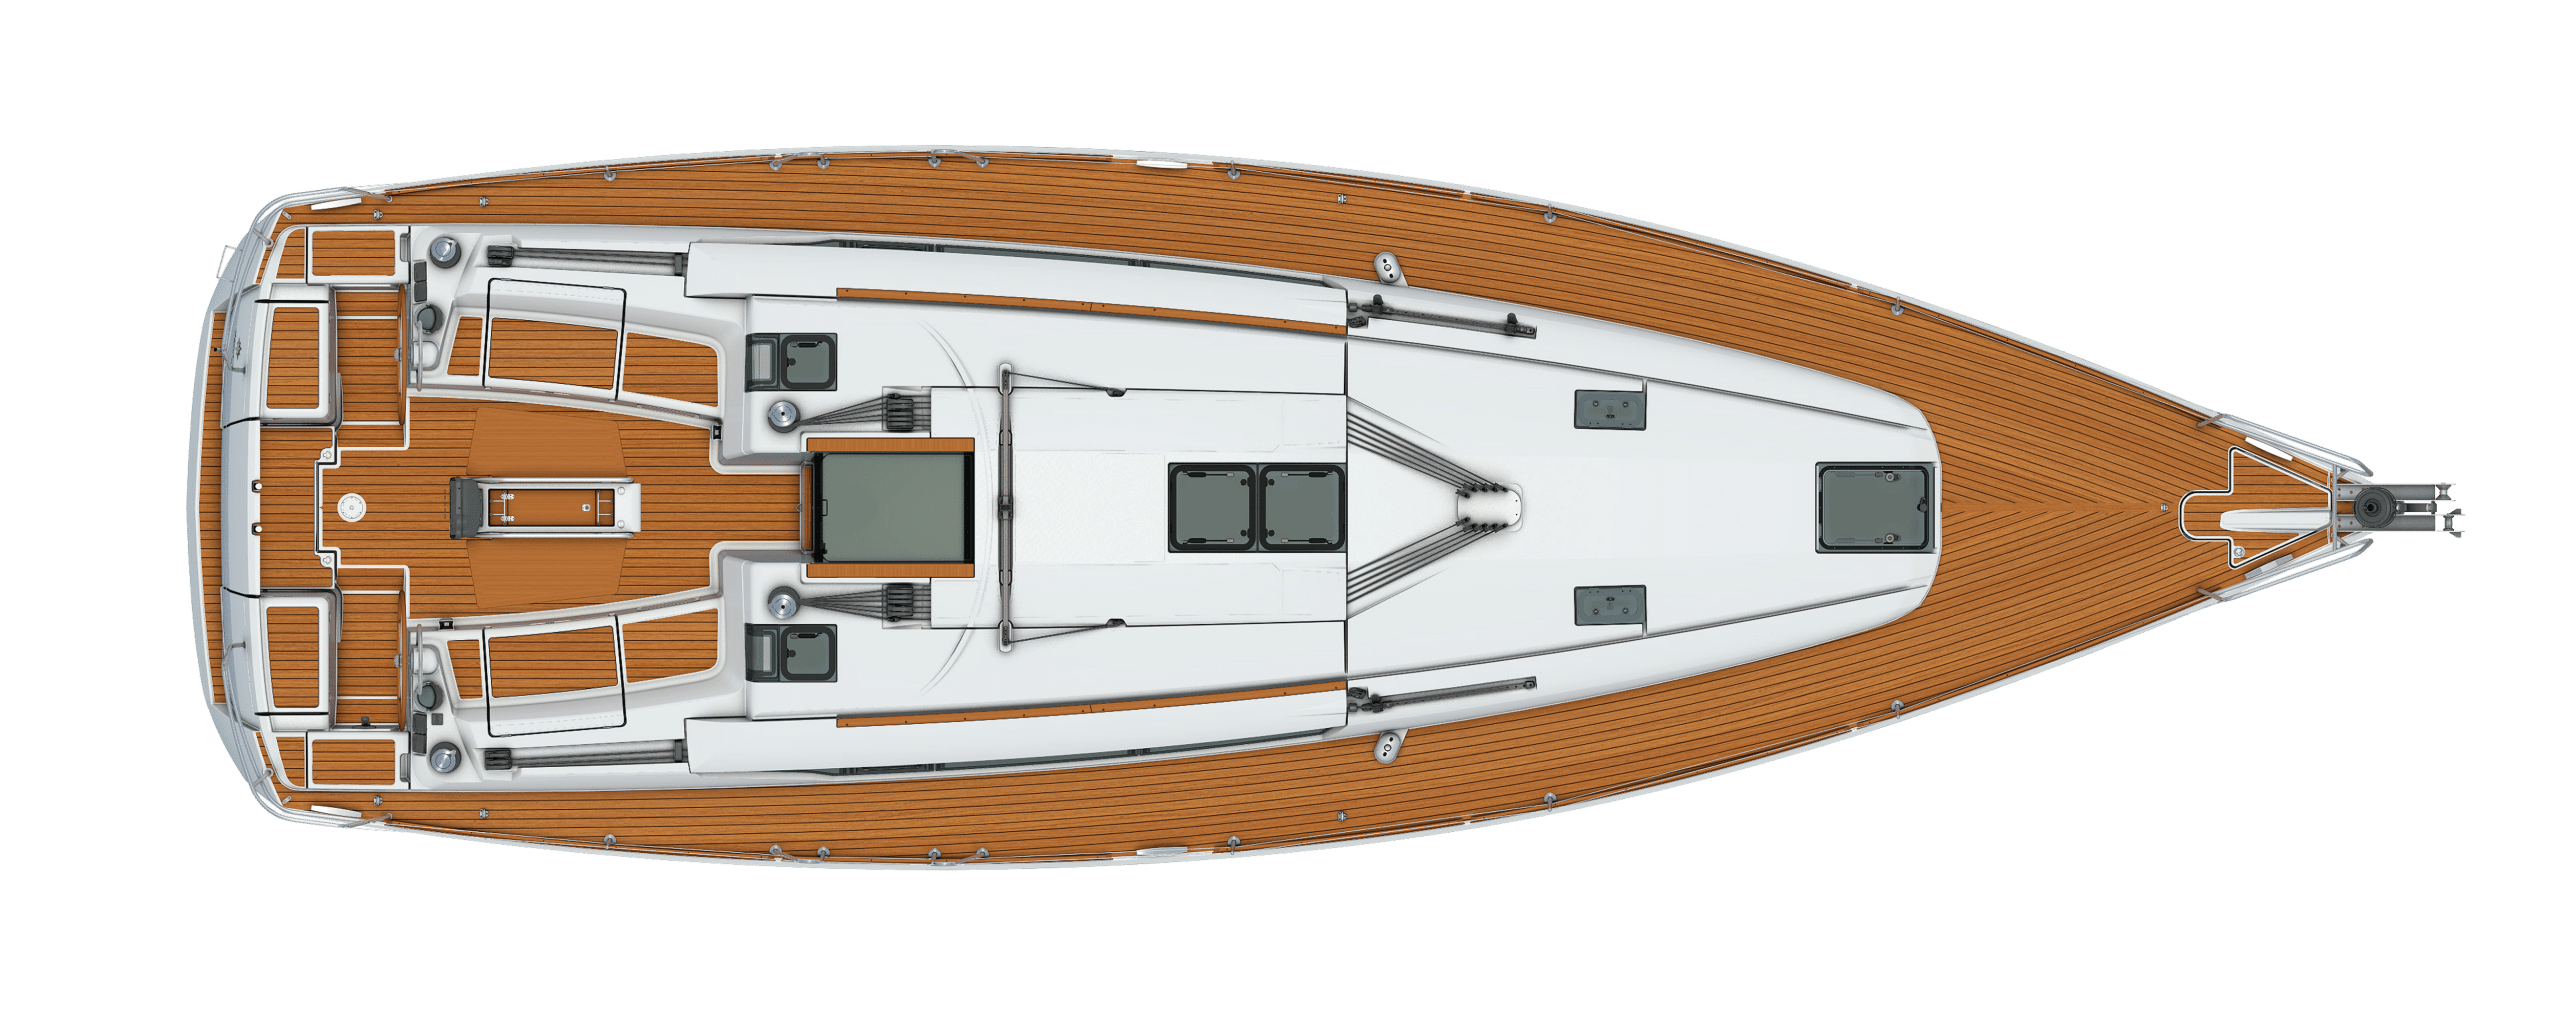 jeanneau-sun-odyssey-439-layout-deck